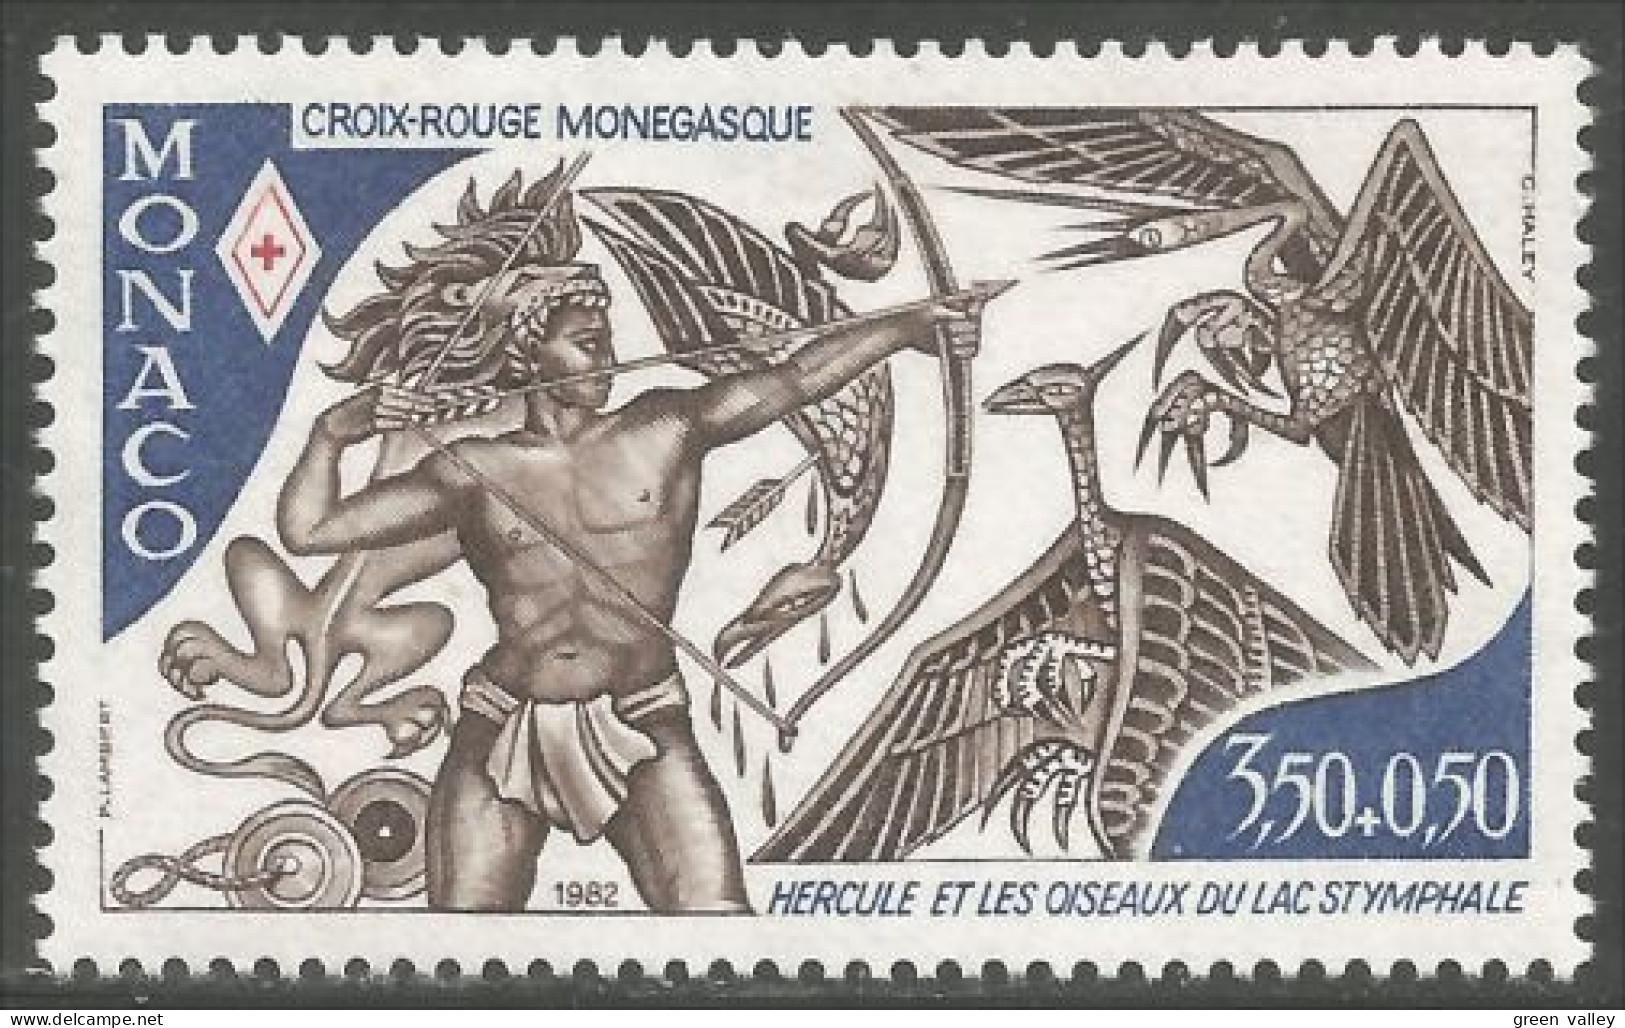 630x Monaco Hercule Dragons Drachen Draghi MH * Neuf (MON-567) - Mythology